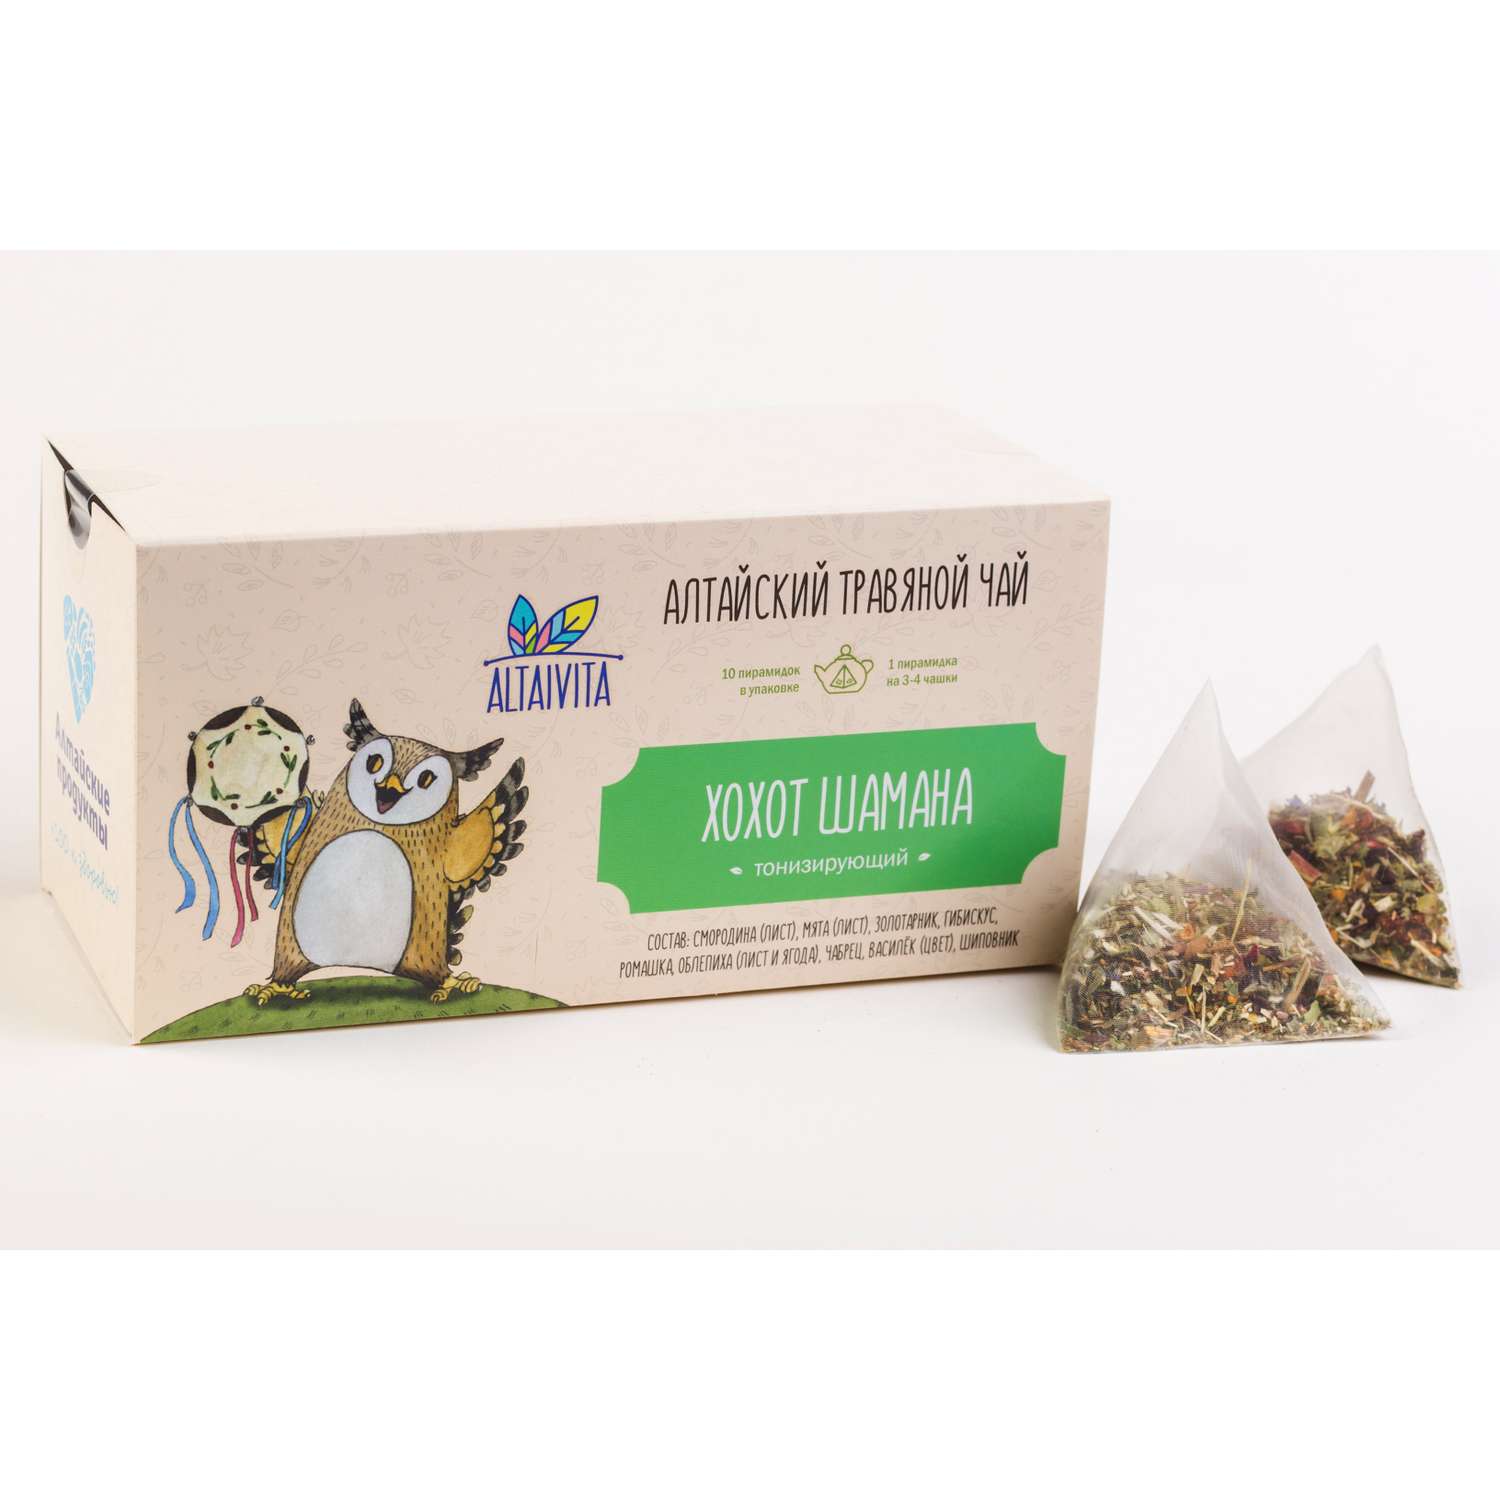 Алтайский травяной чай Altaivita Хохот Шамана 40 г в пирамидках по 4 гр - фото 2